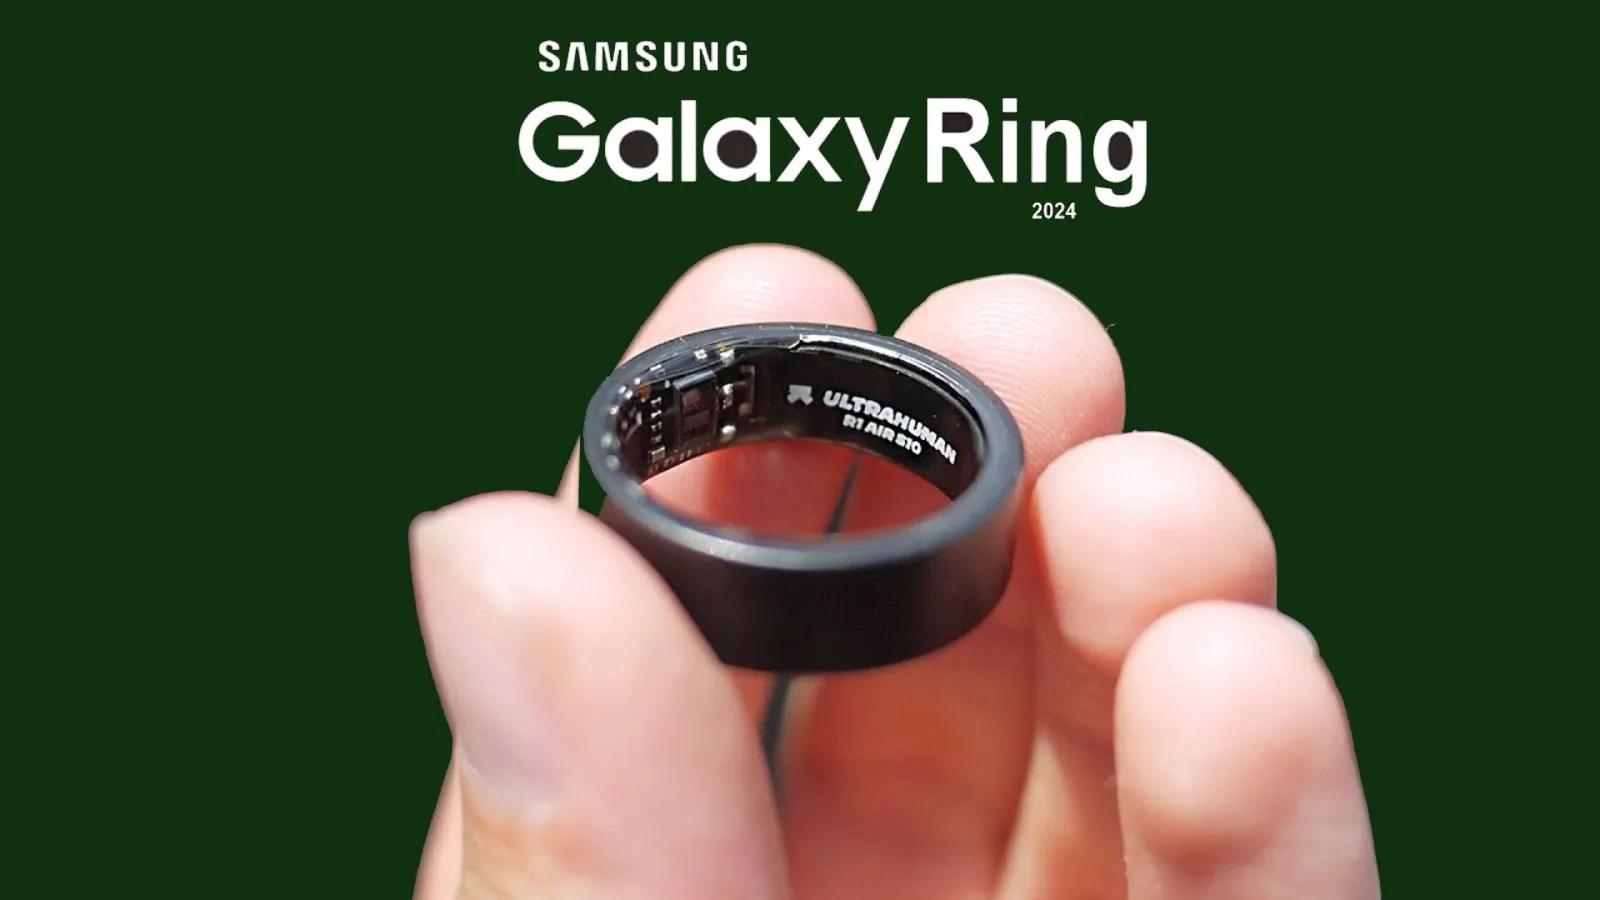 Merakla beklenen Samsung Galaxy Ring’in fiyatı ortaya çıktı